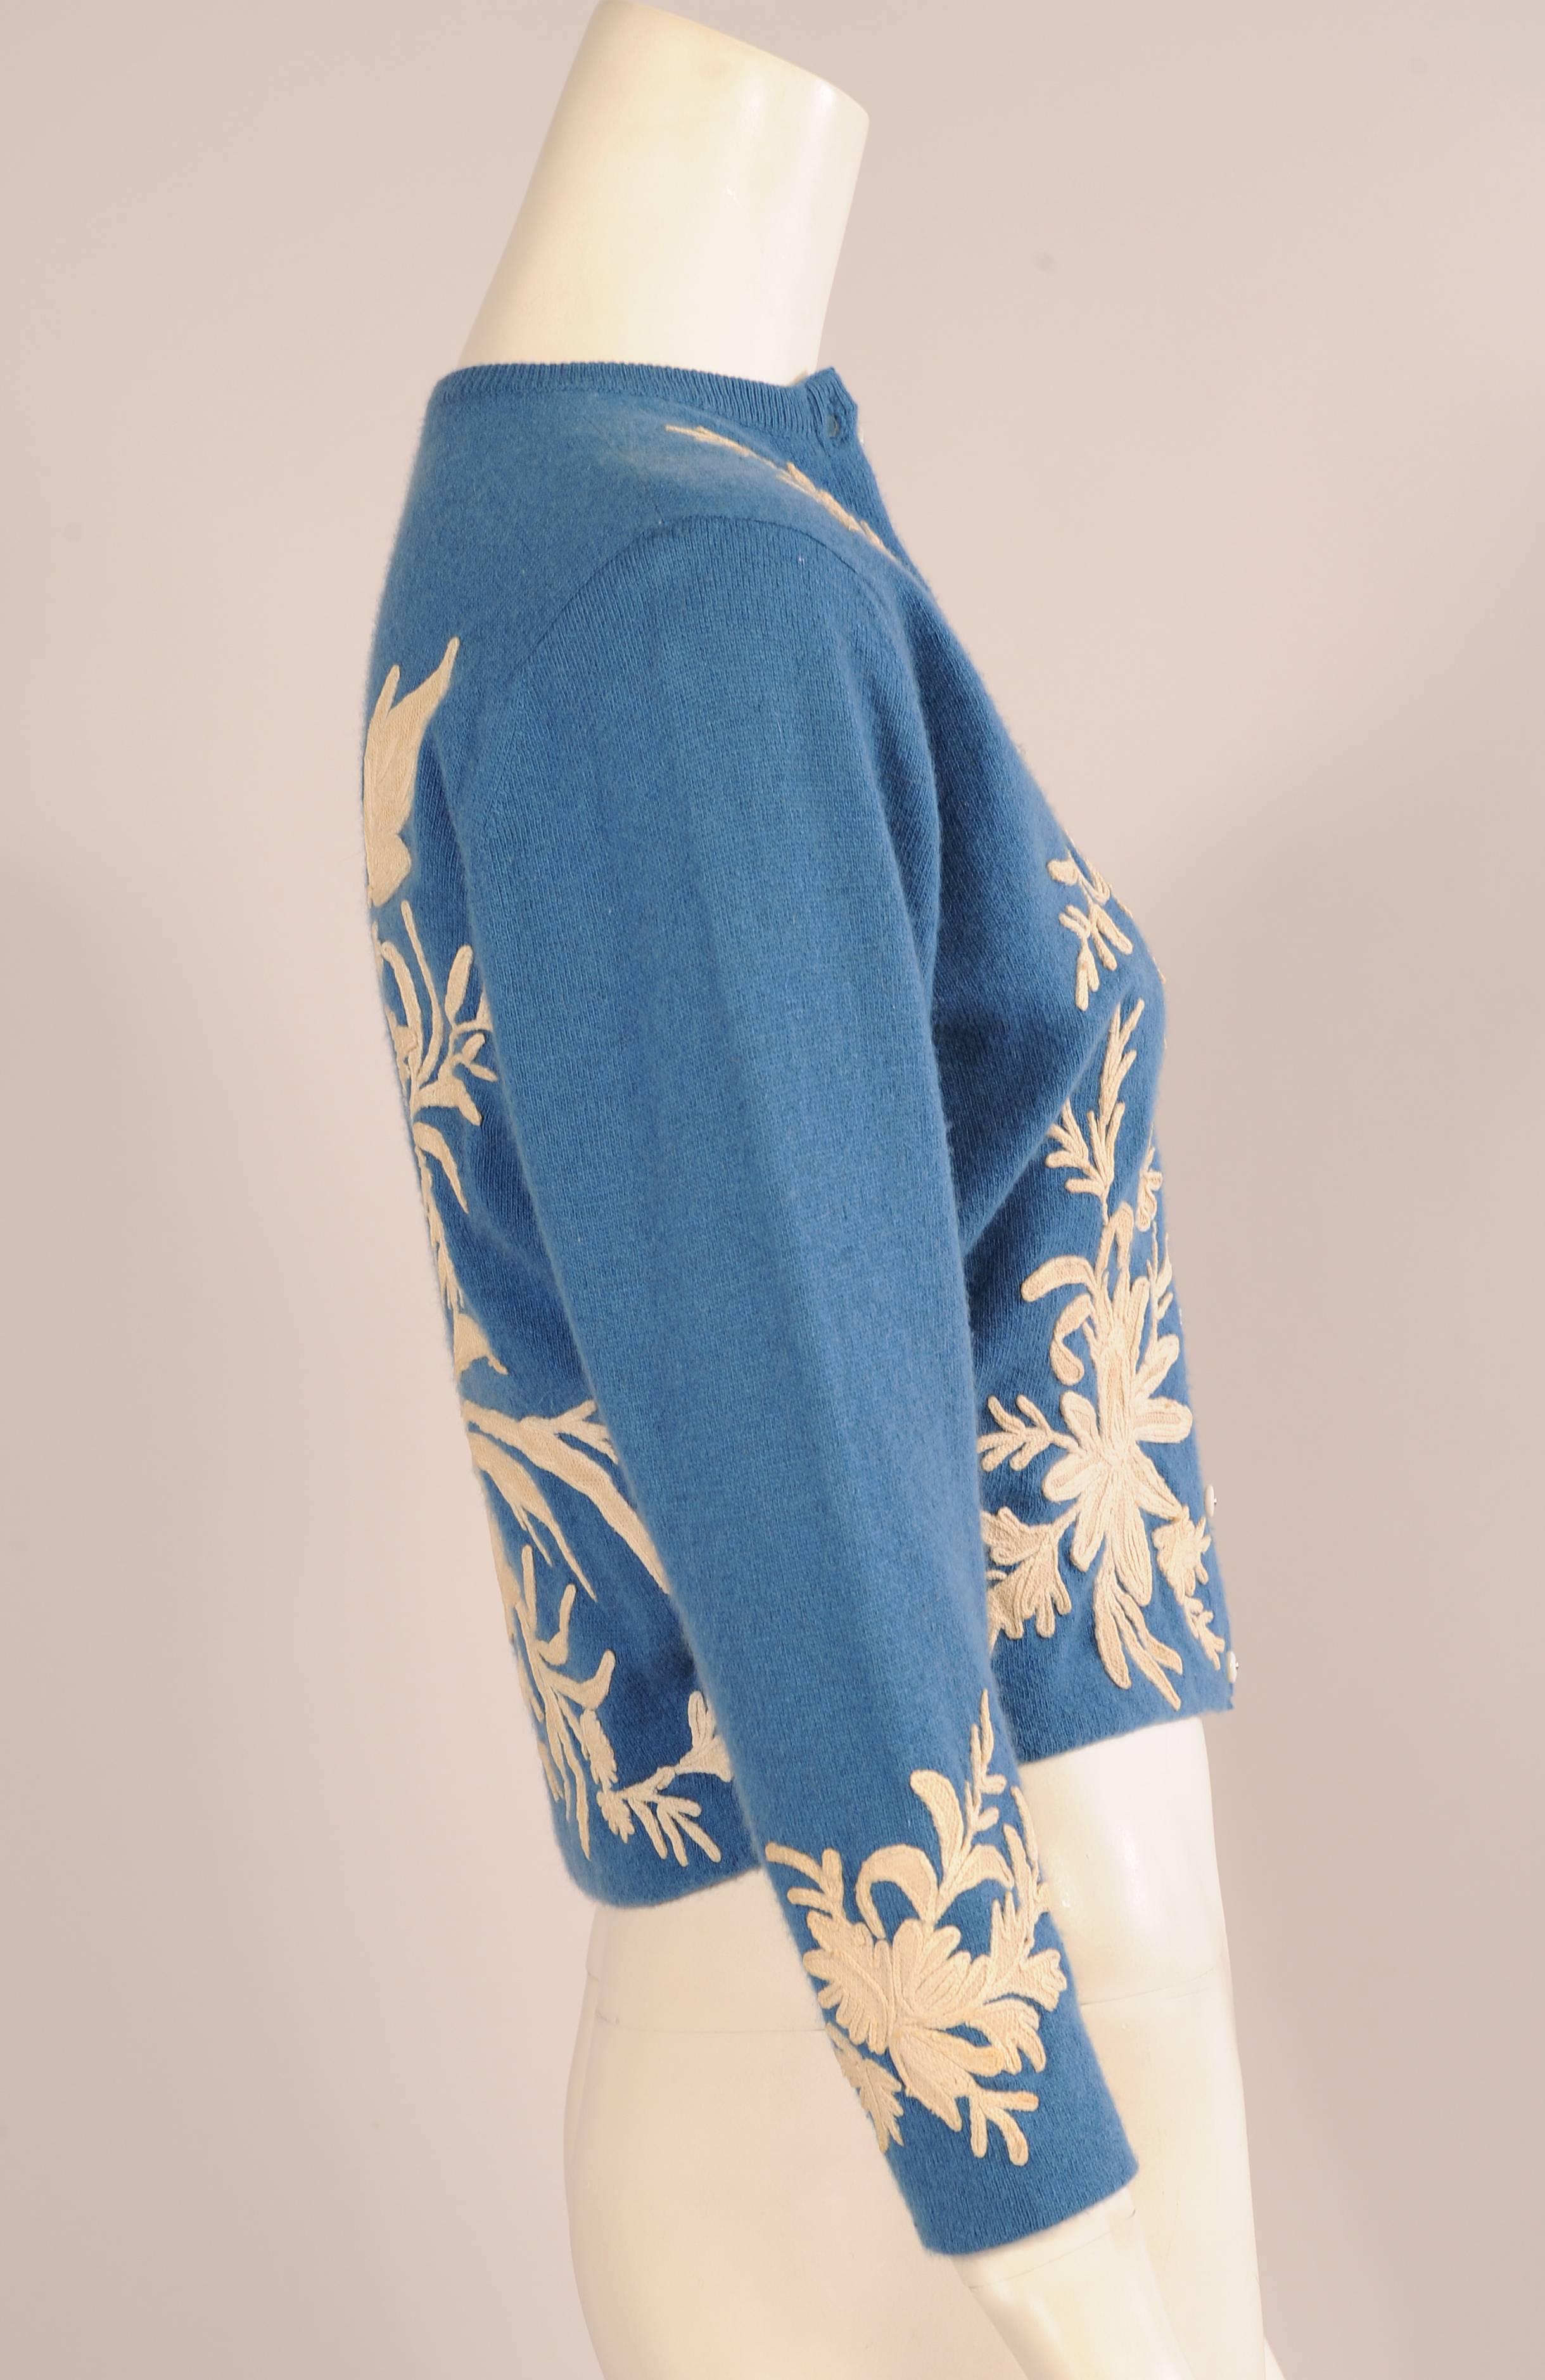 Blue Helen Bond Carruthers Antique Lace Appliqued Cashmere Sweater circa 1950